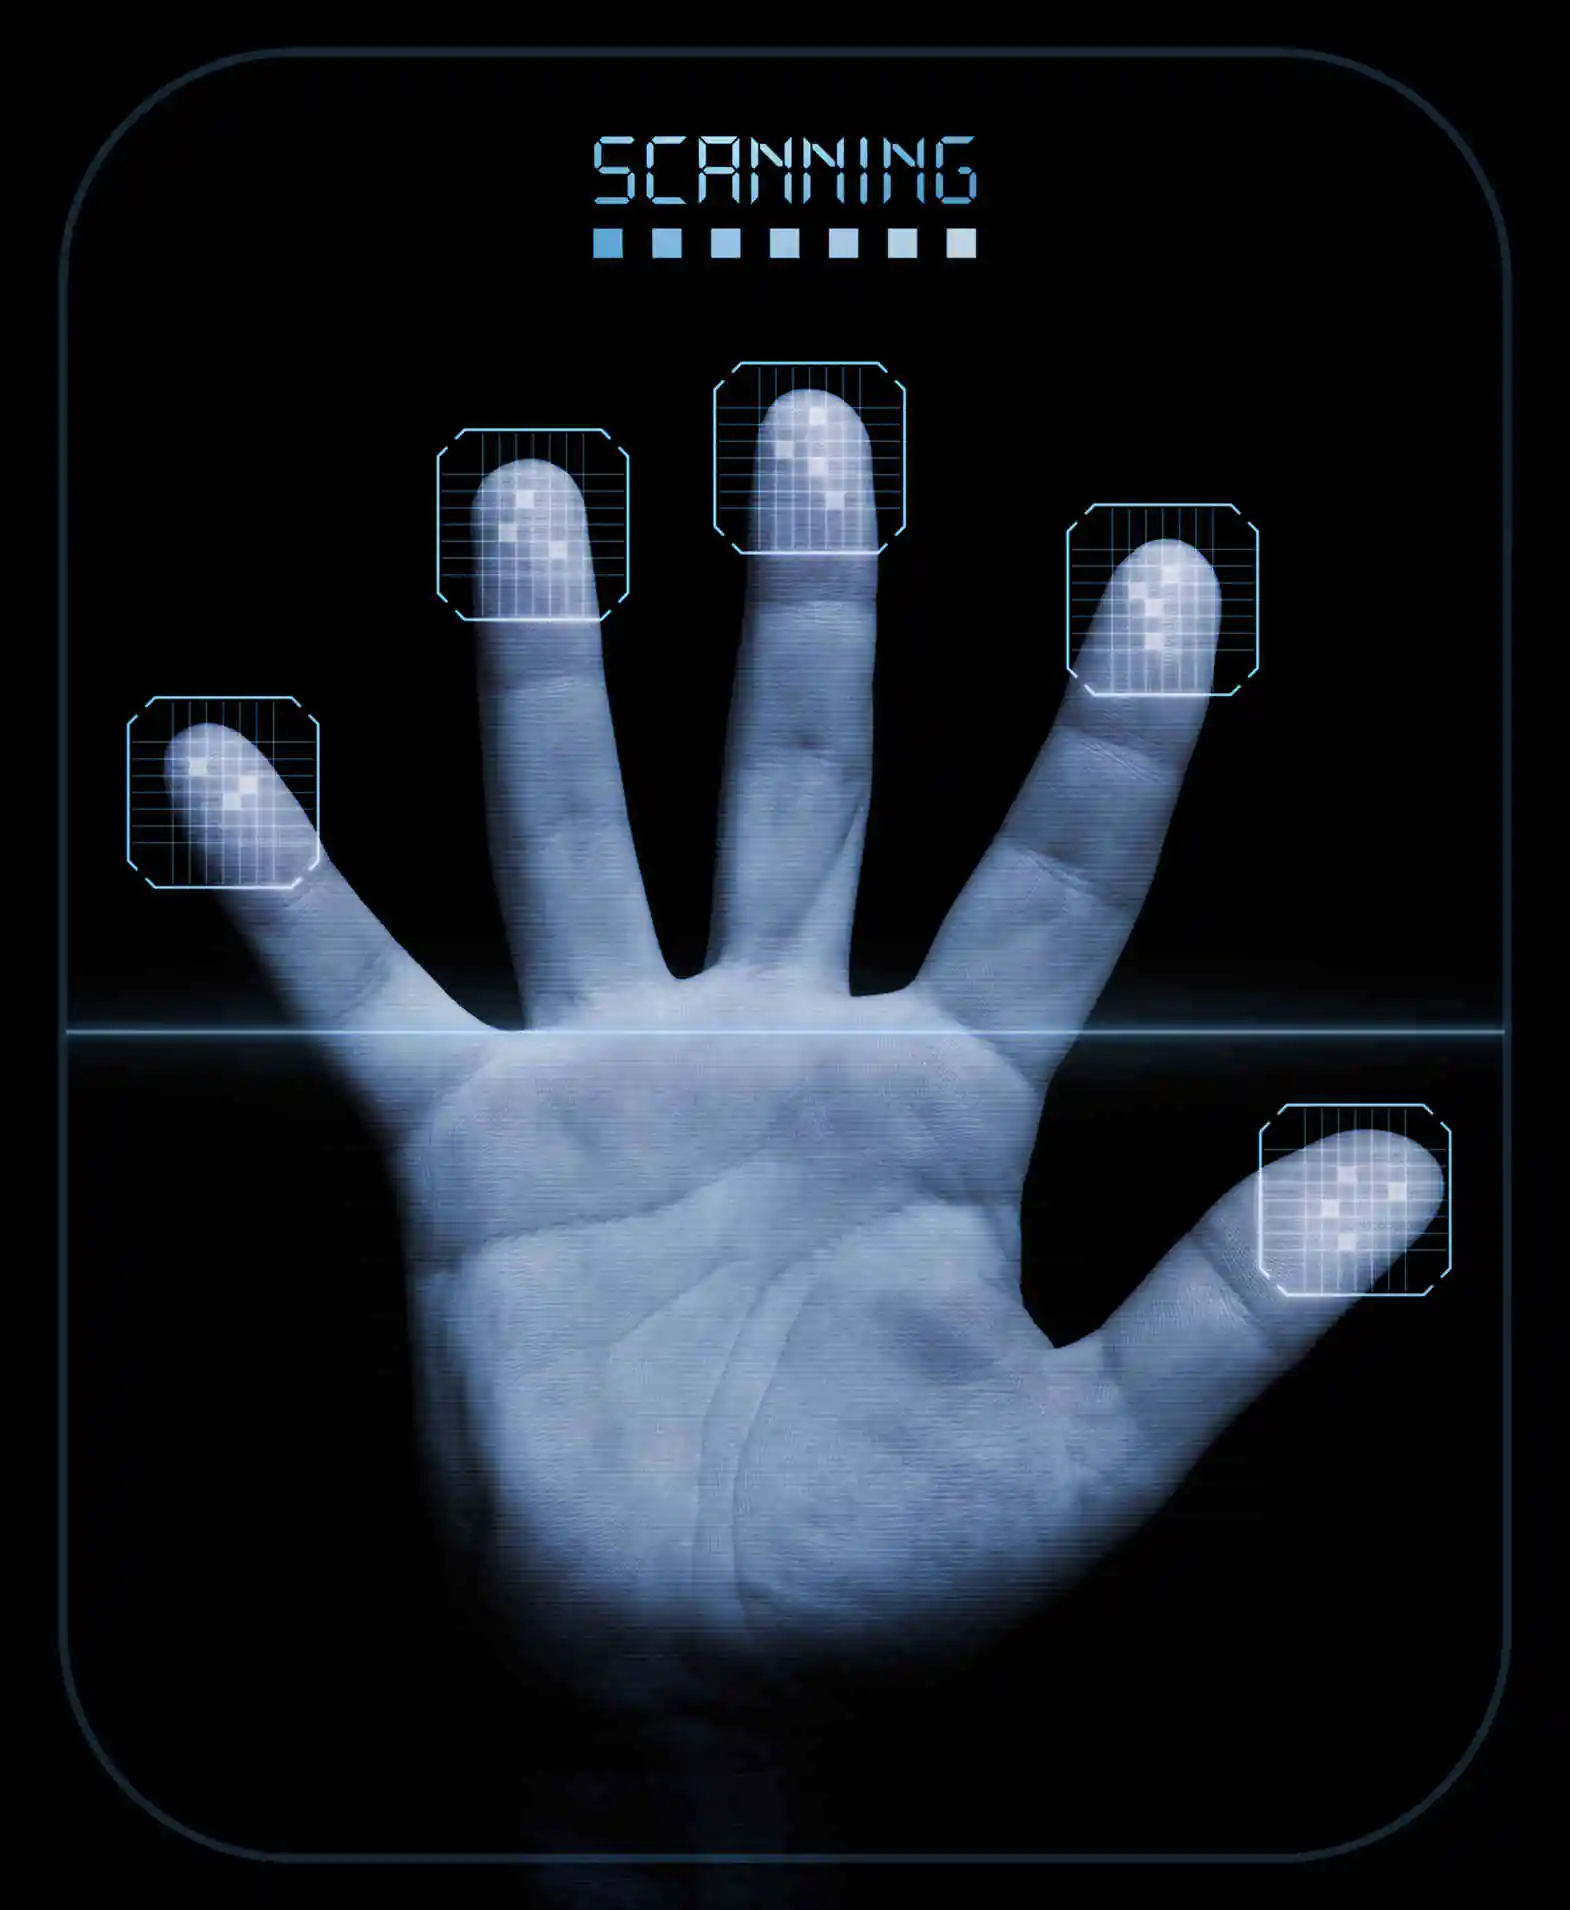 Fingerprint Biometrics